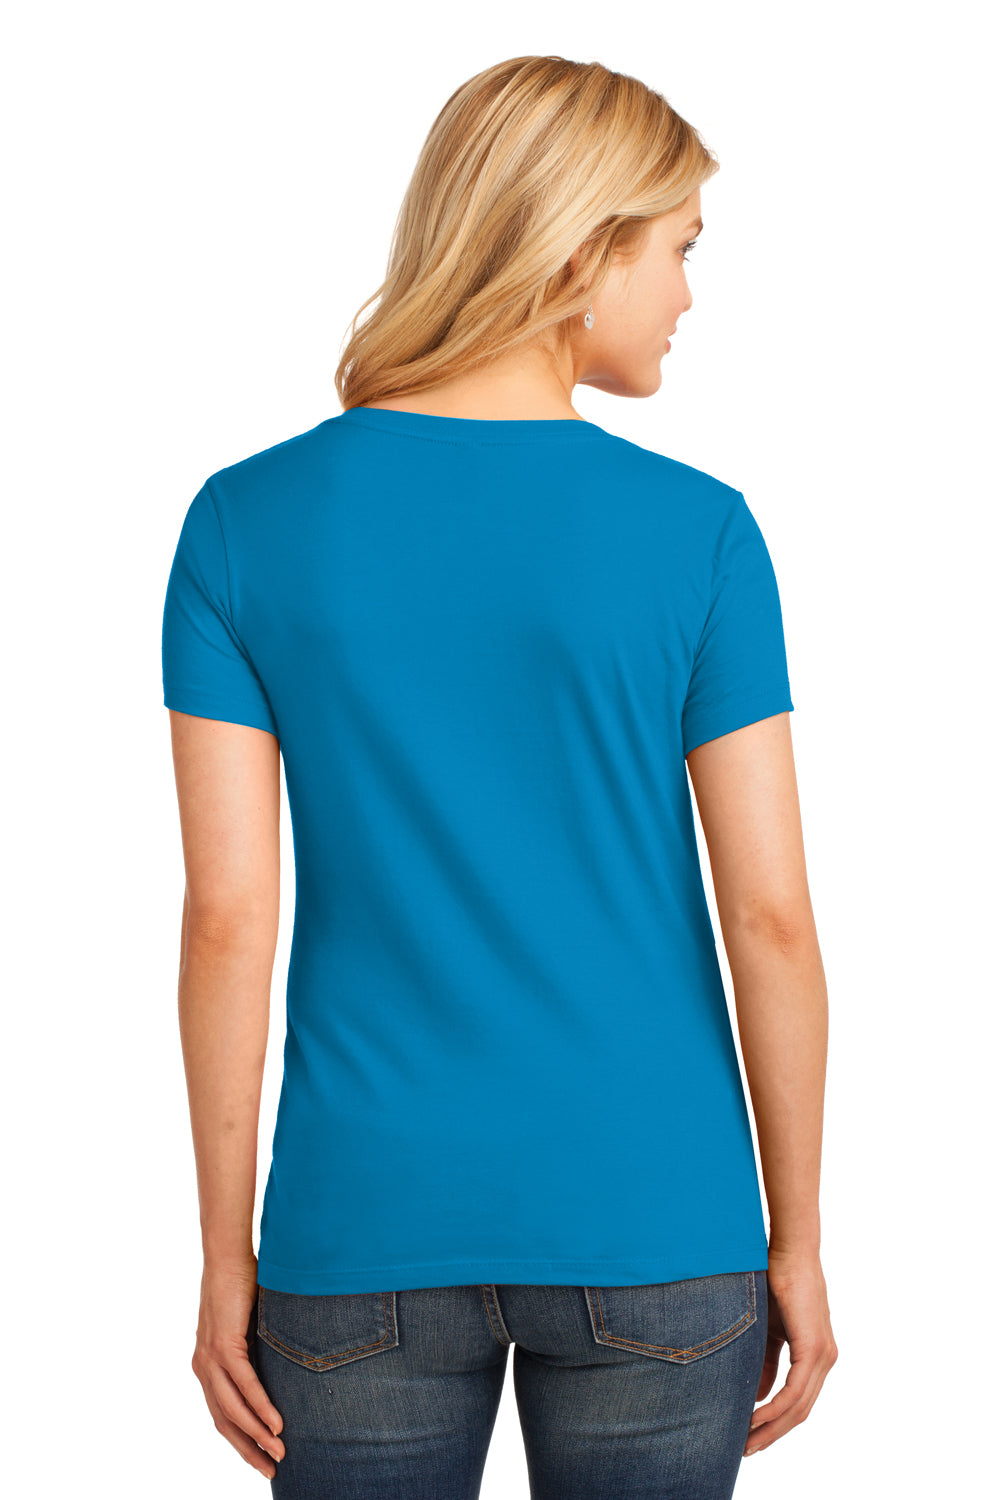 Port & Company LPC54V Womens Core Short Sleeve V-Neck T-Shirt Sapphire Blue Back